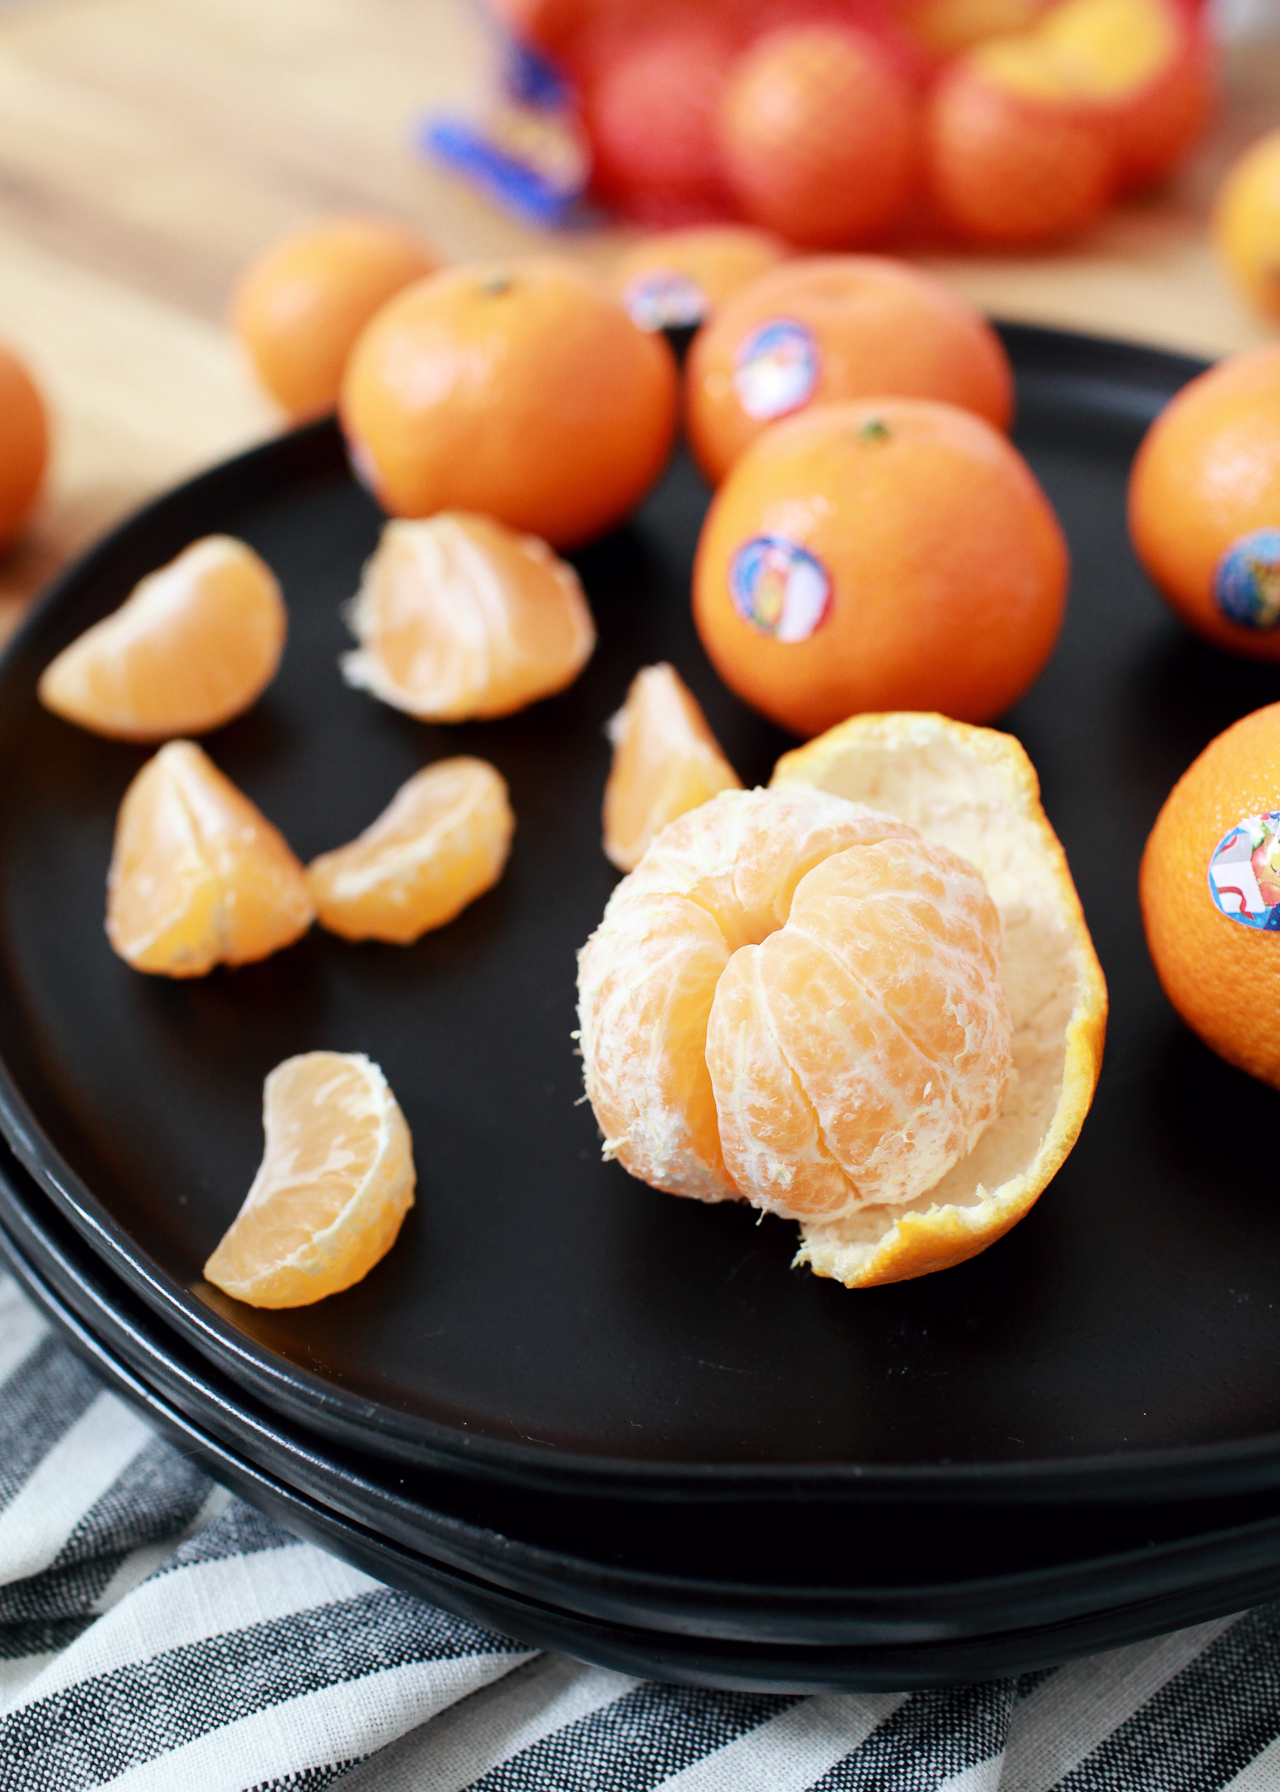 Celebrate the Season of Giving with Cuties Mandarin Oranges